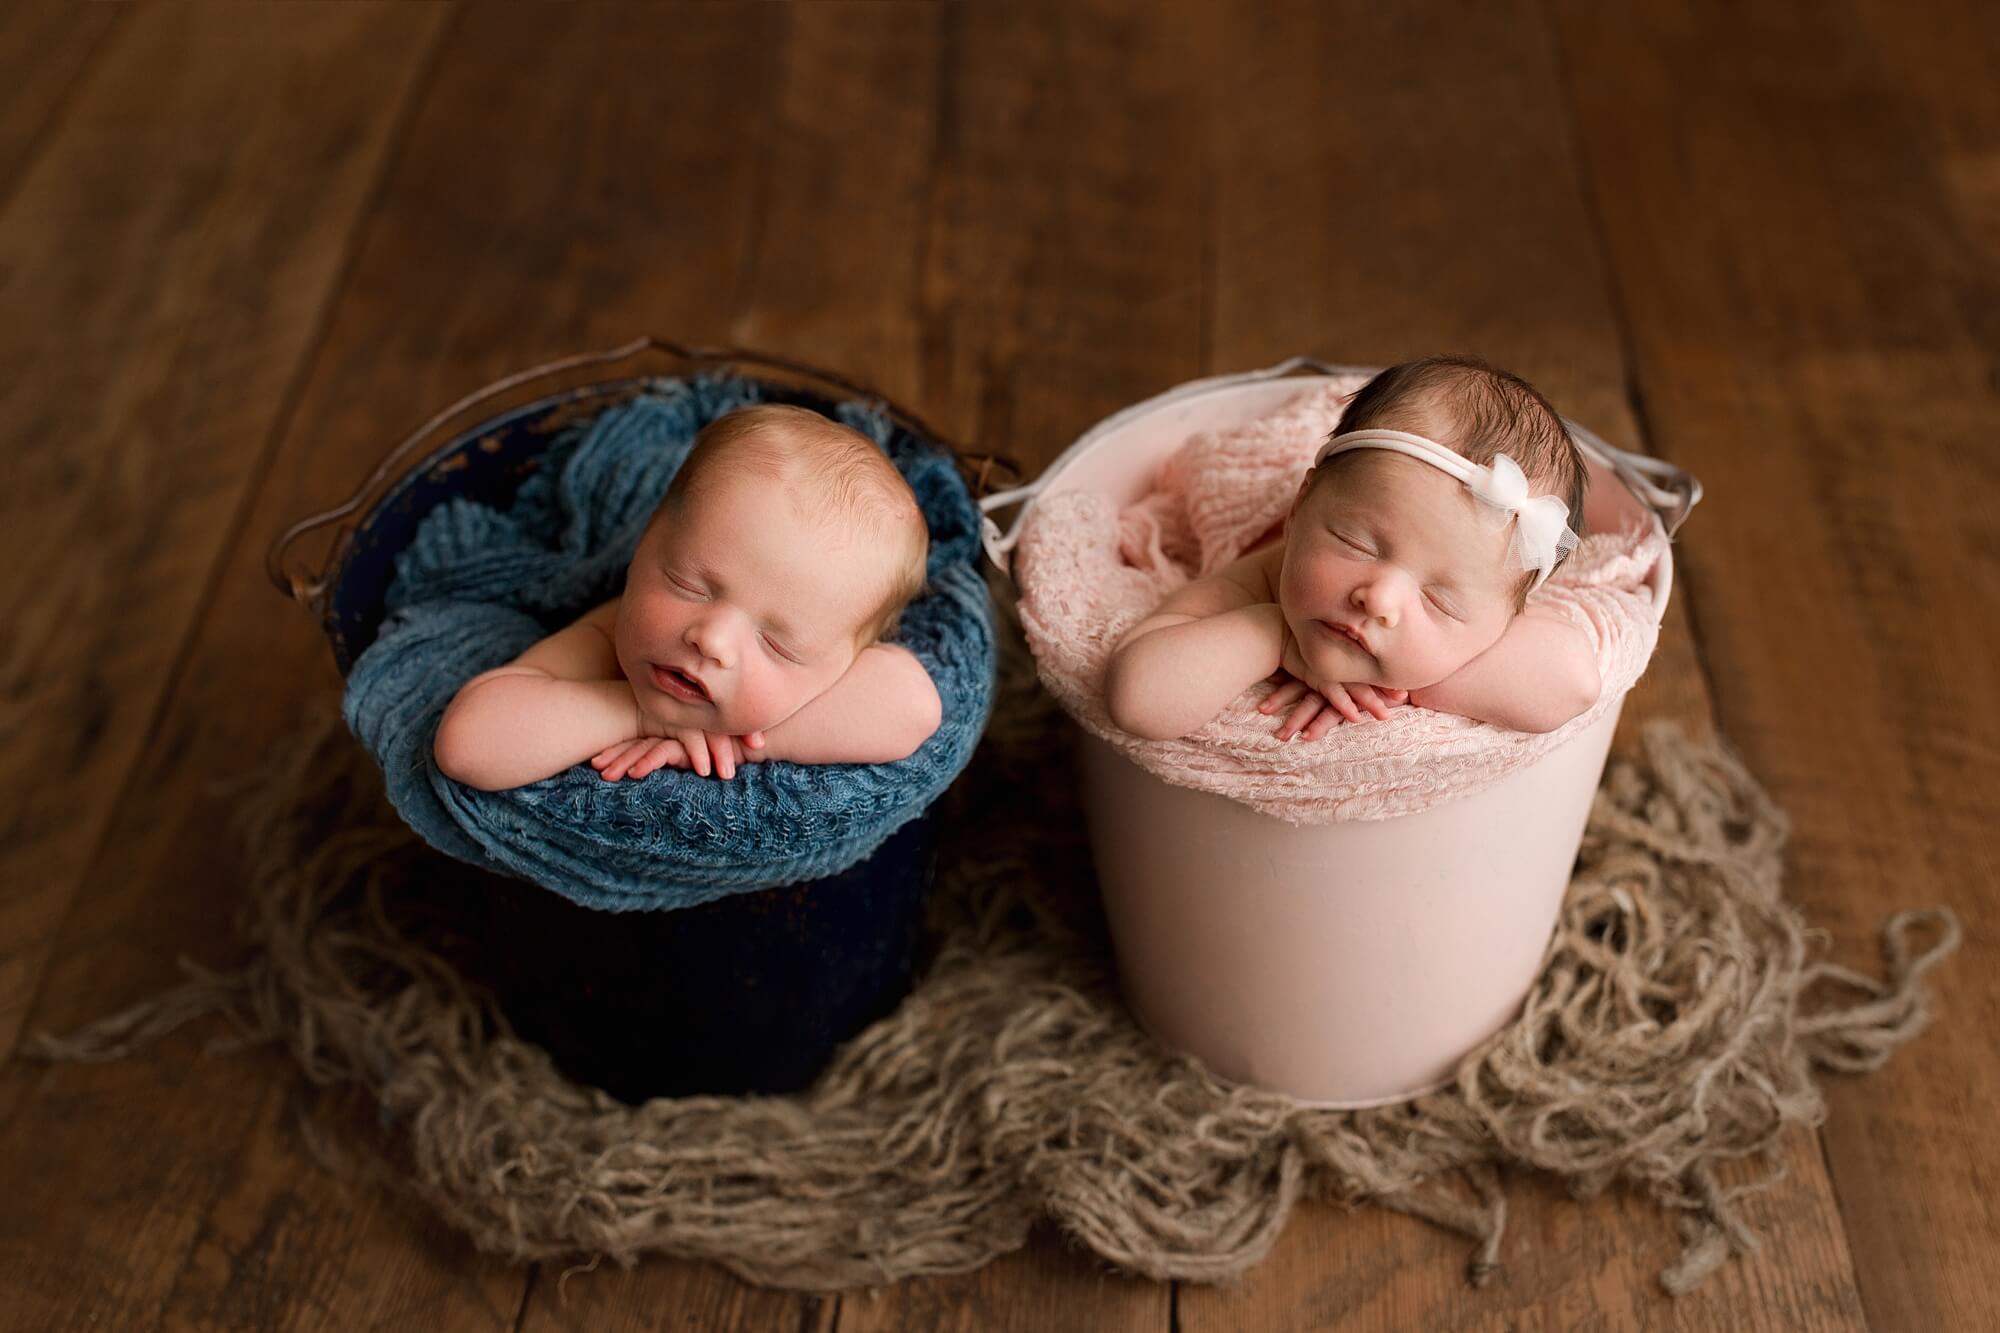 twin newborn photography in tacoma wa